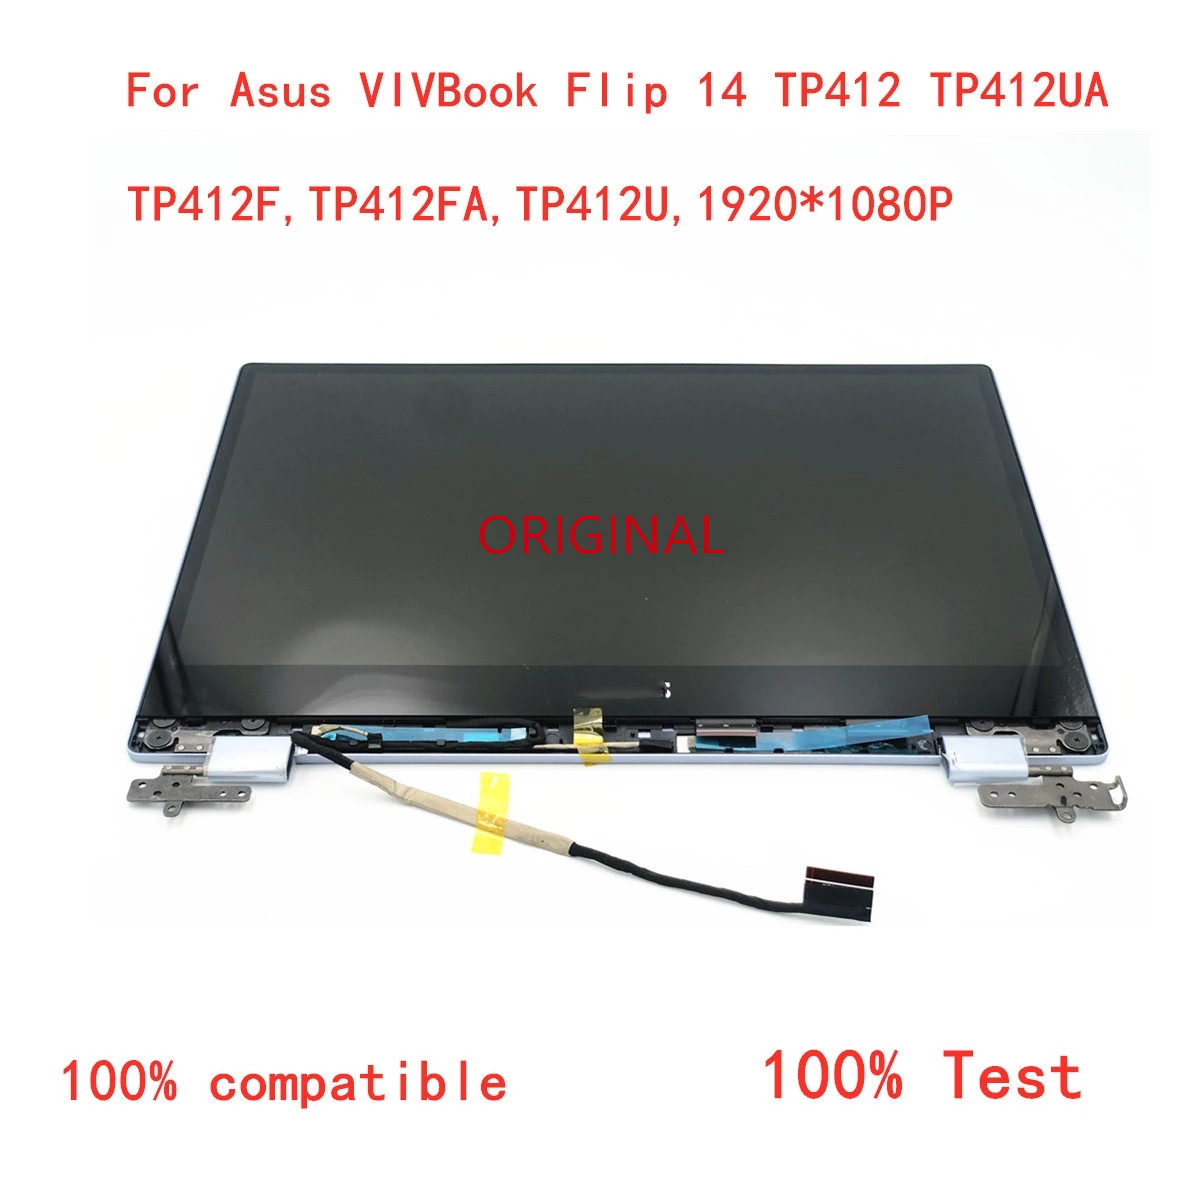 ASUS VivoBook Flip 14 TP412 TP412U TP412UA TP412F..